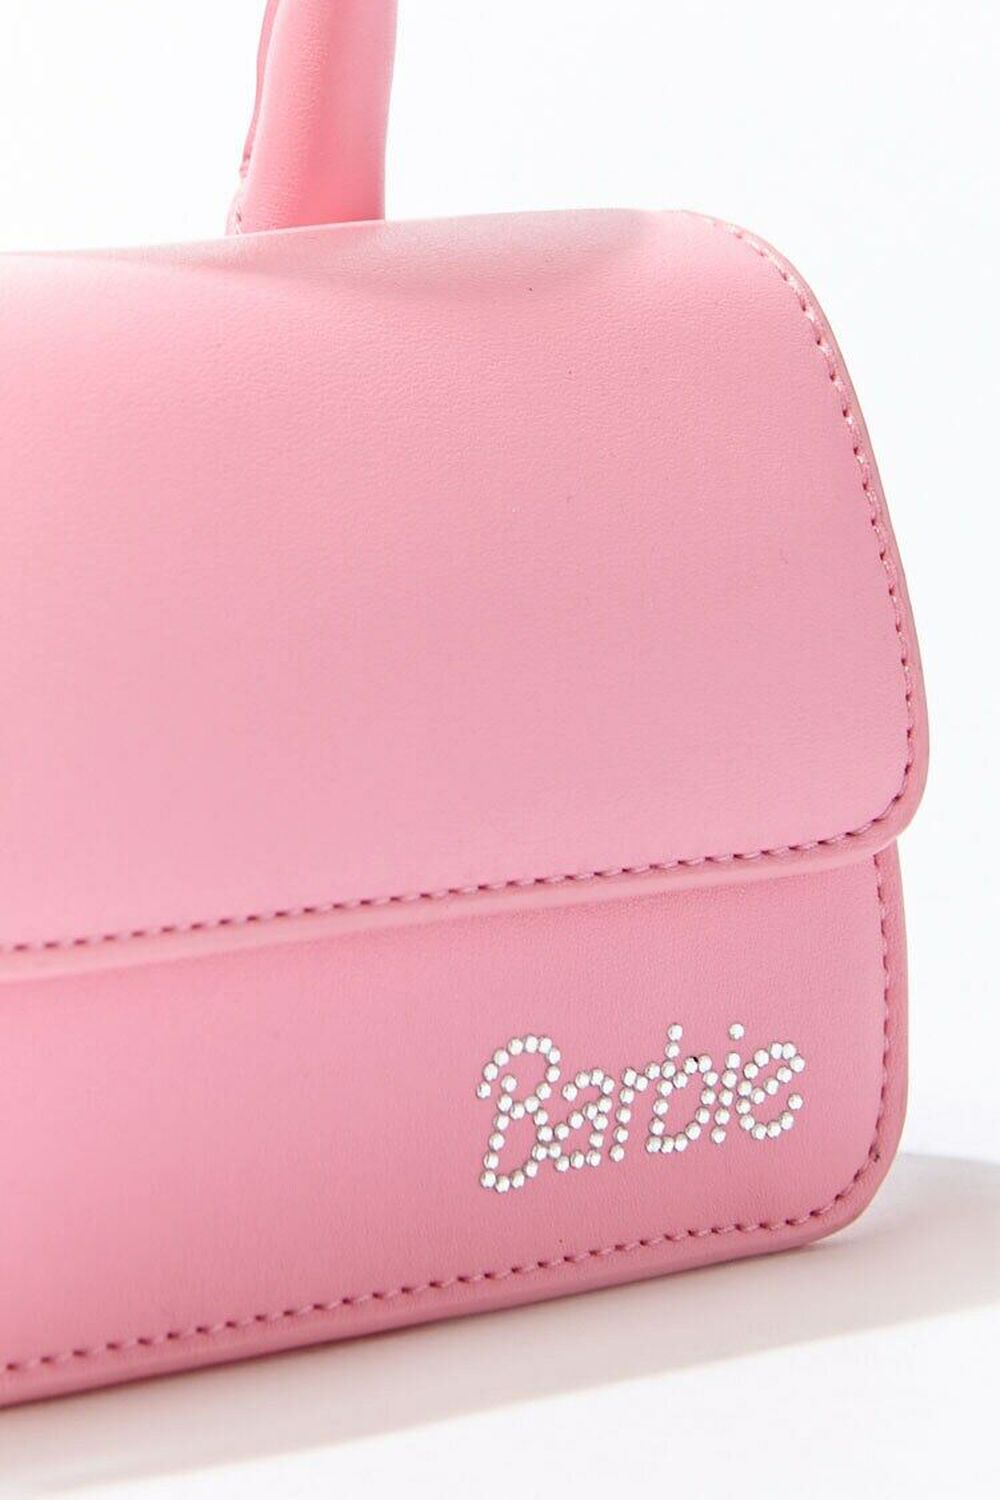 Barbie Coin Purse Crossbody Bag - Zipper Closure, Adjustable Ribbon St